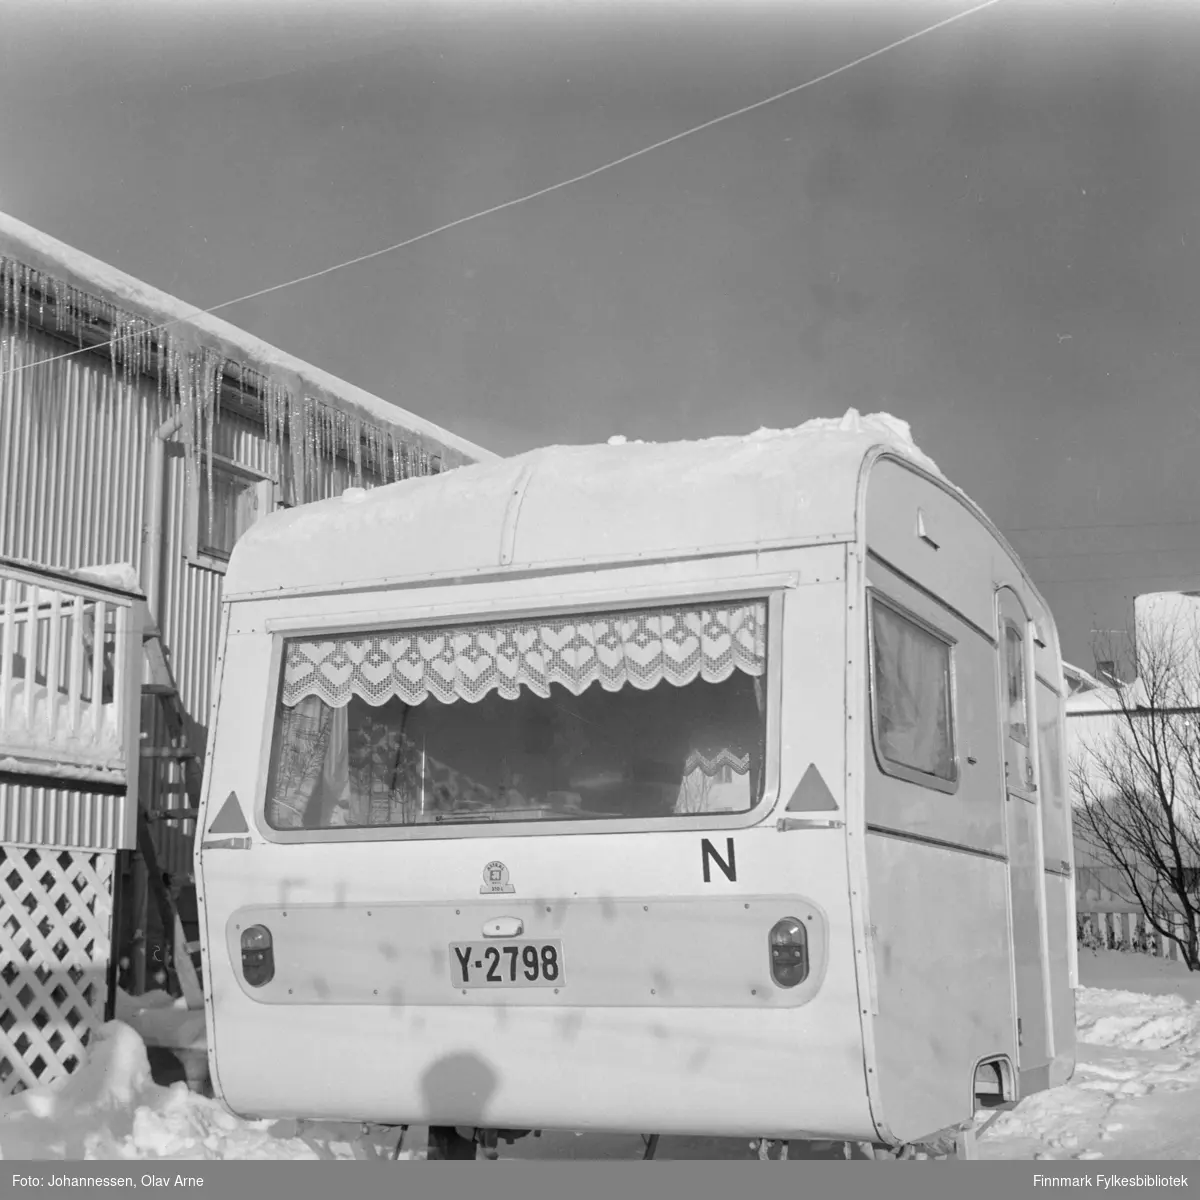 En campingvogn står parkert ute i snøen. Vognen har skiltnummer Y-2798